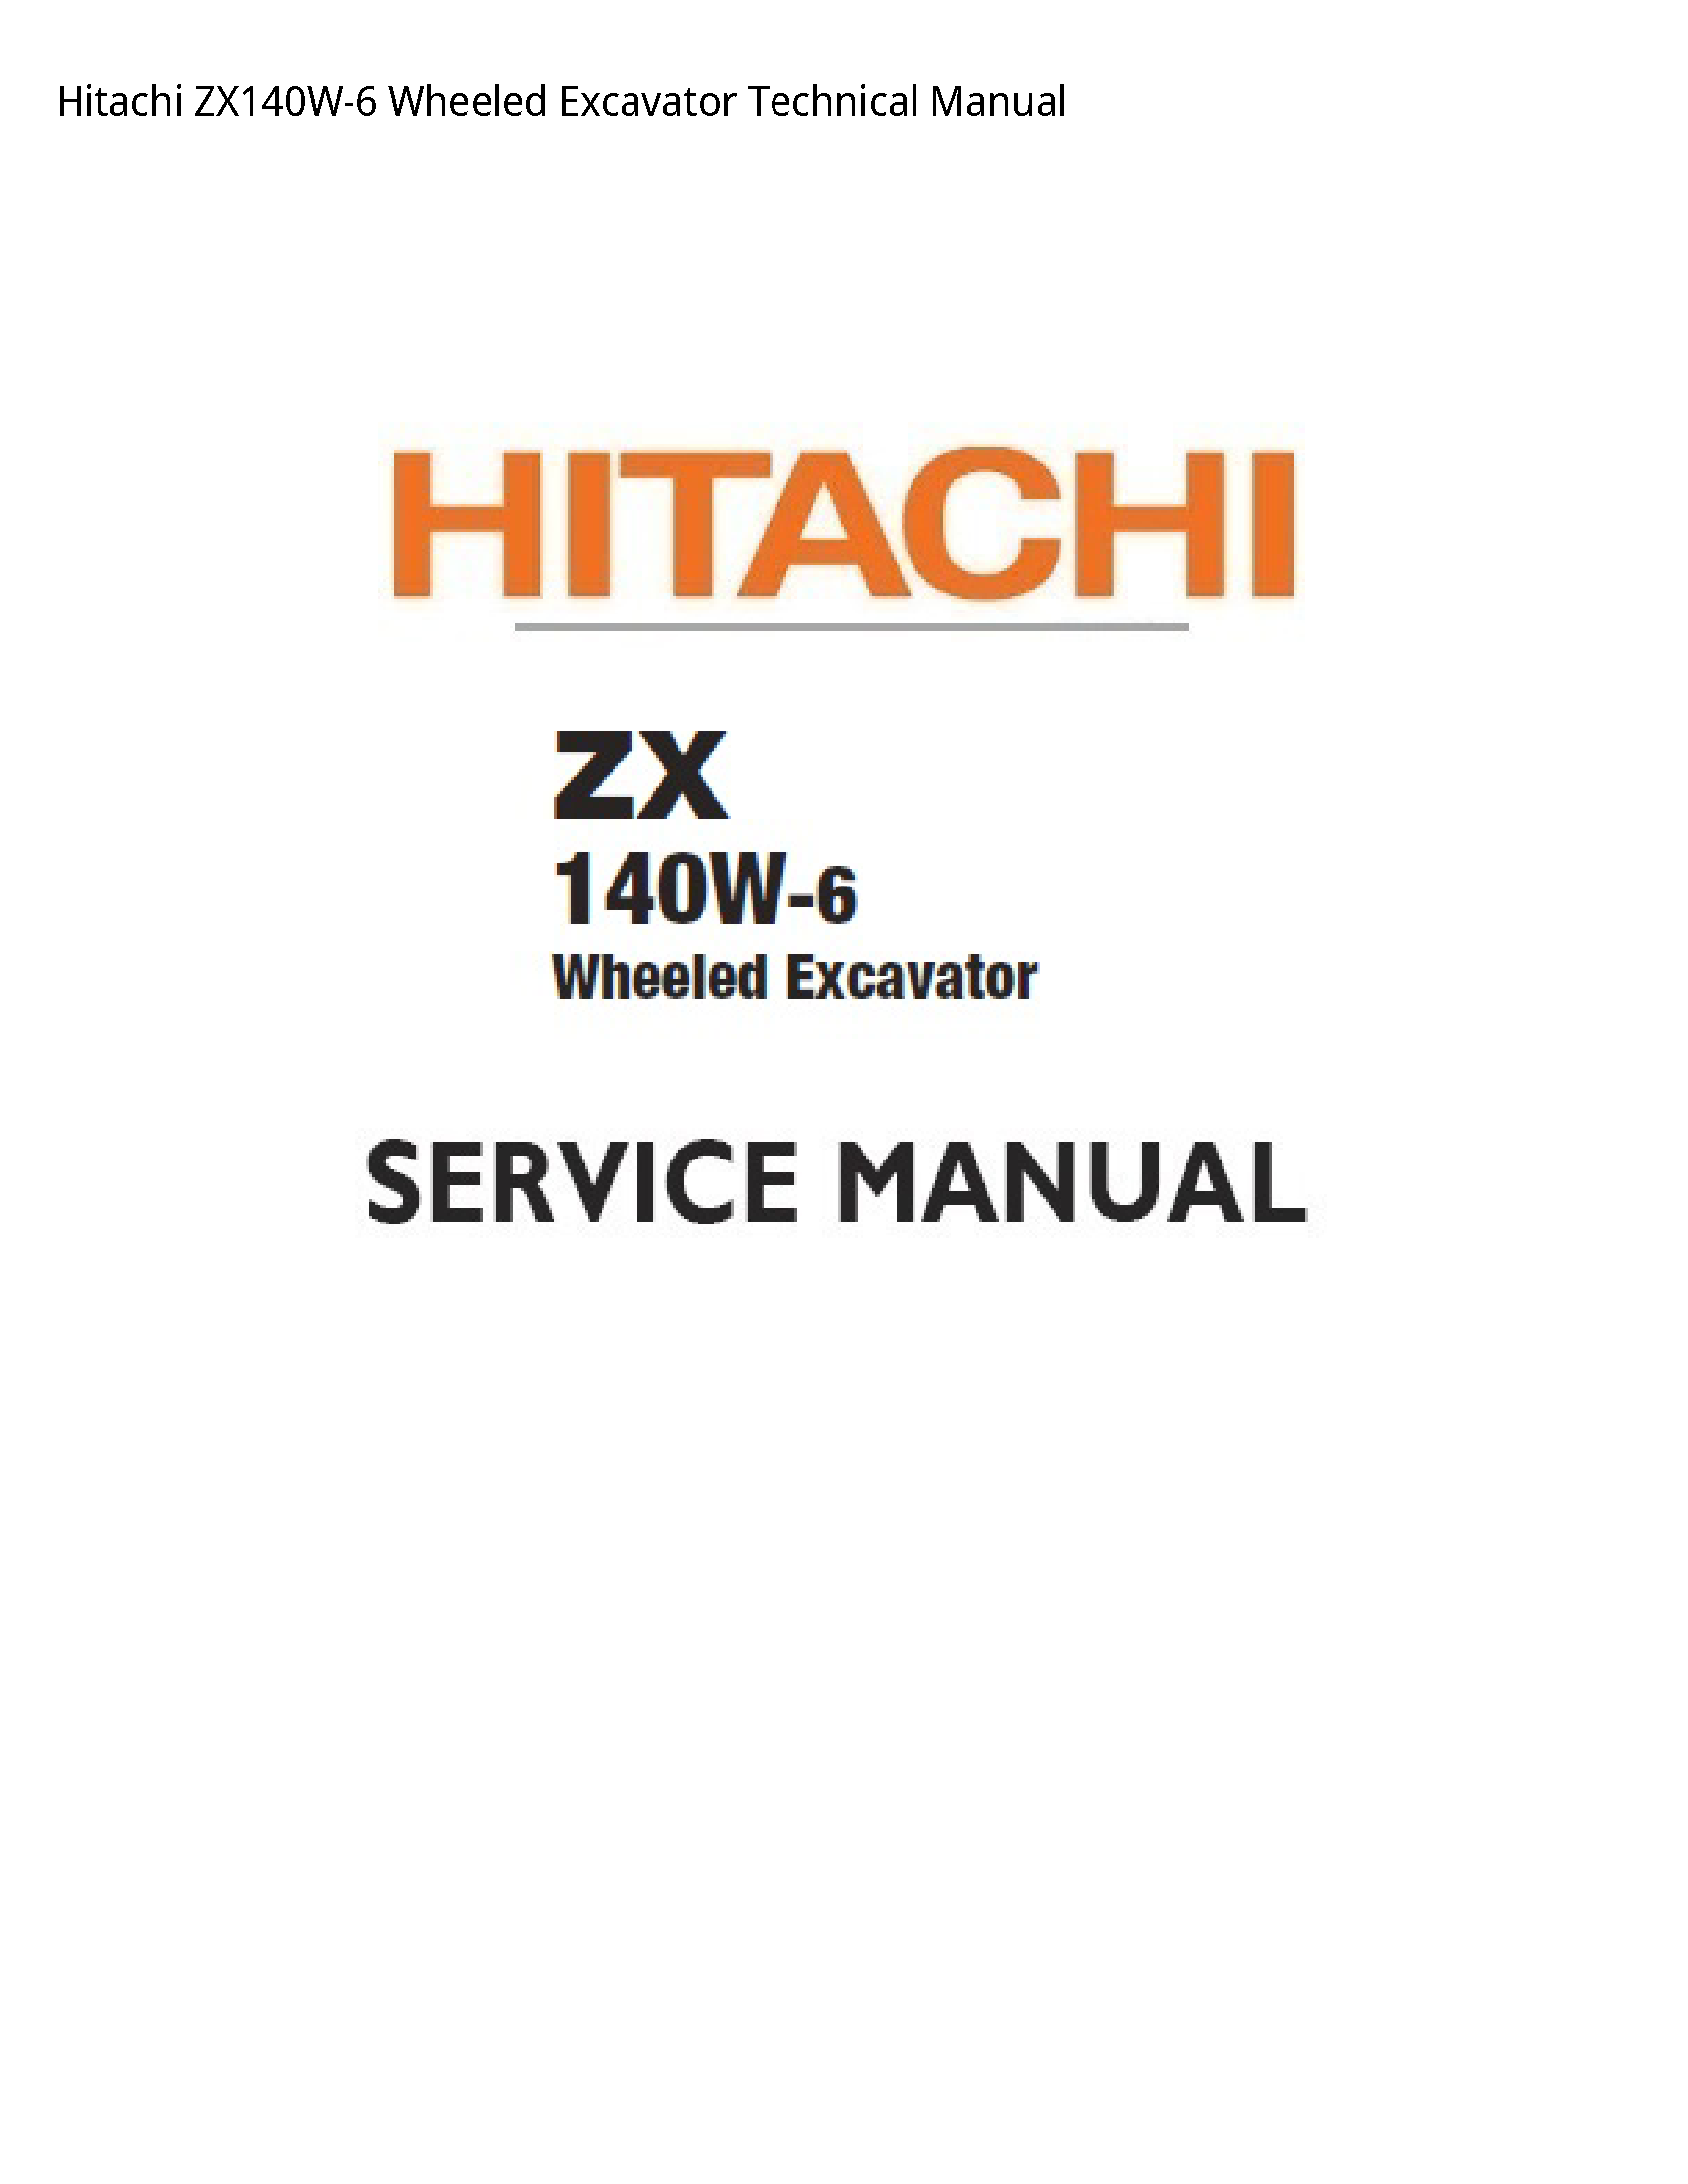 Hitachi ZX140W-6 Wheeled Excavator Technical manual